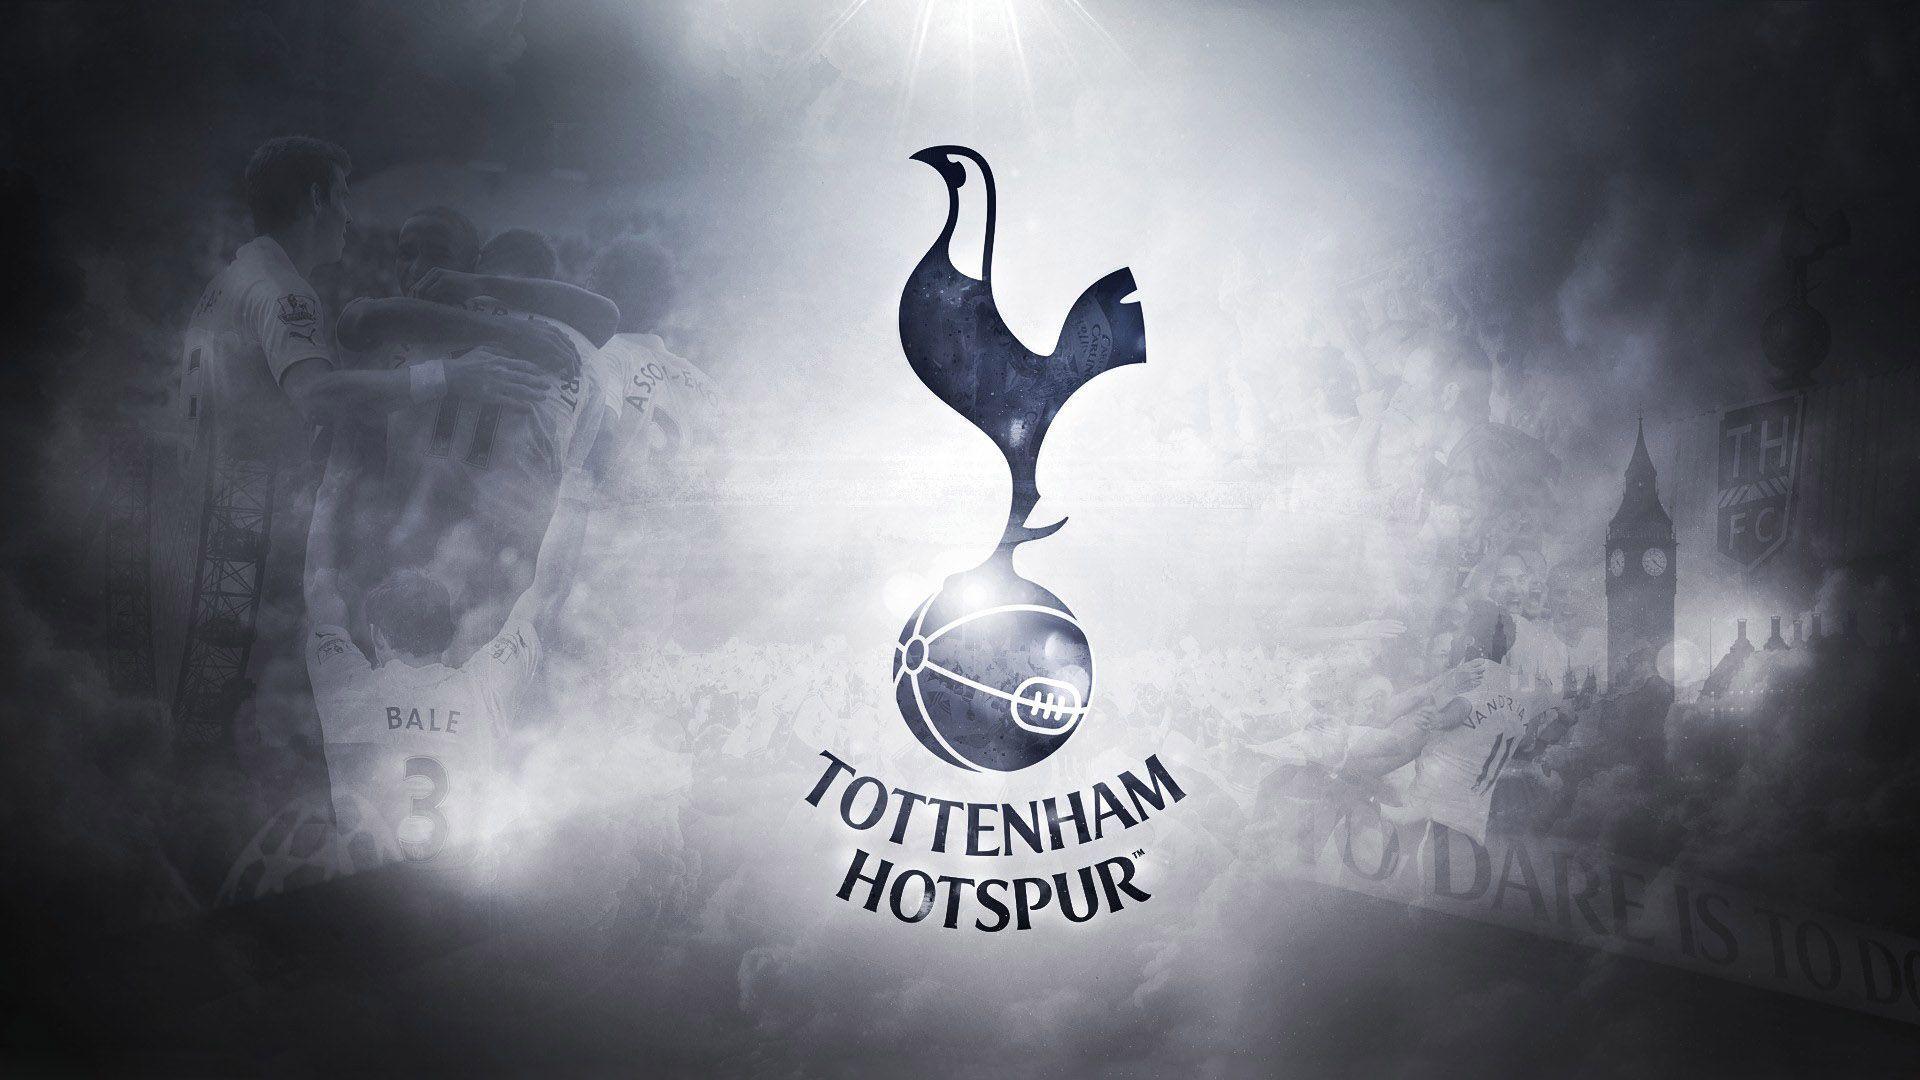 Tottenham Hotspur FC 2014 Logo Wallpaper Wide or HD. Sports